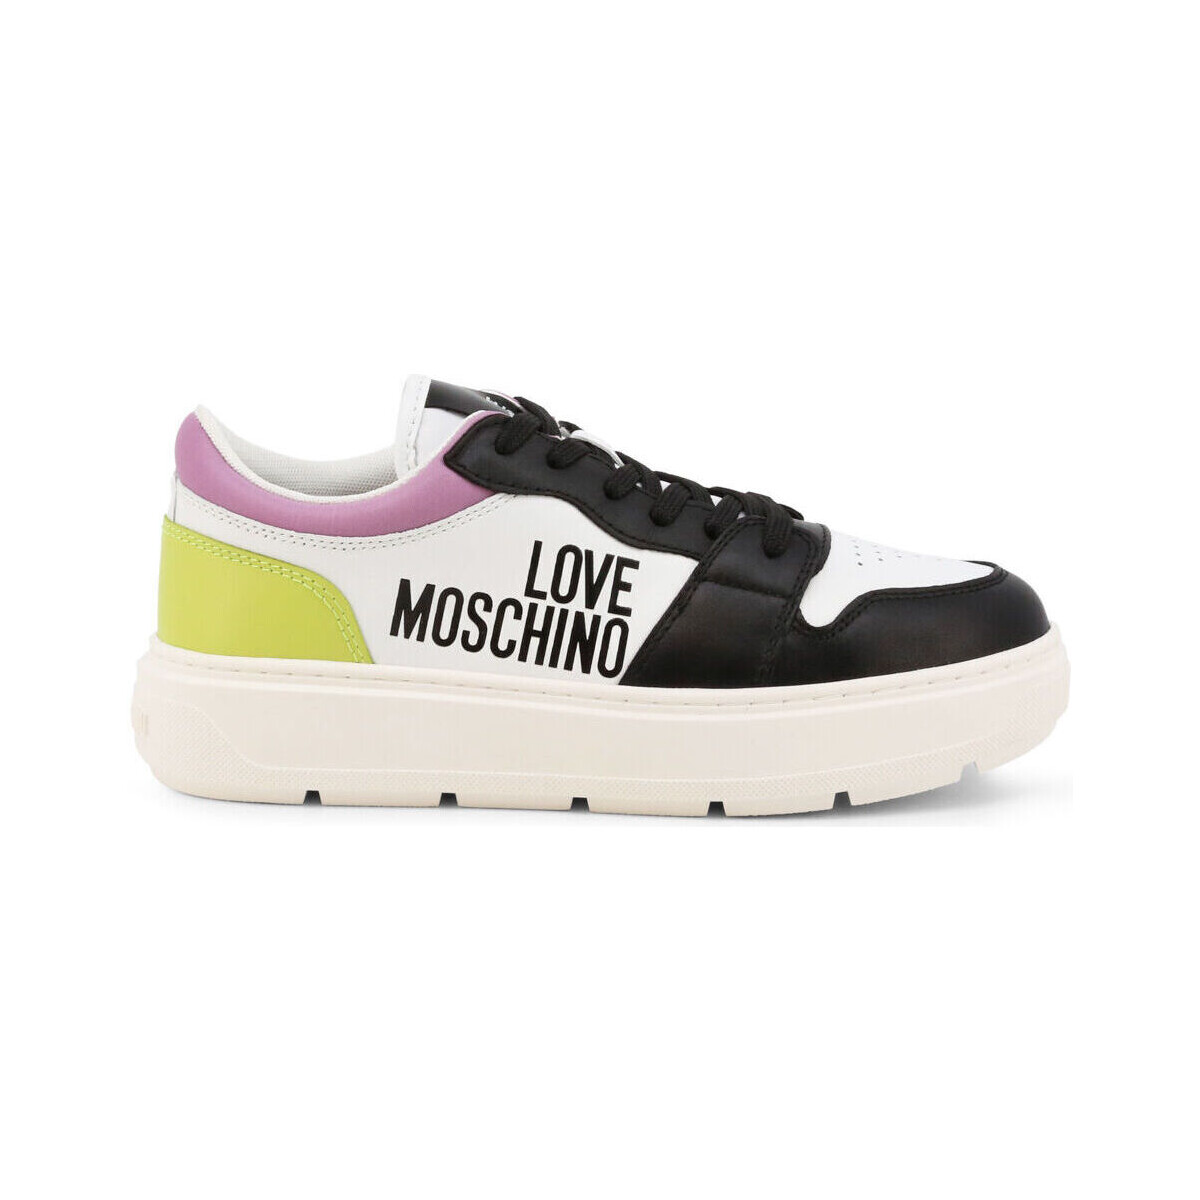 Zapatos Mujer Deportivas Moda Love Moschino - ja15274g1giab Blanco